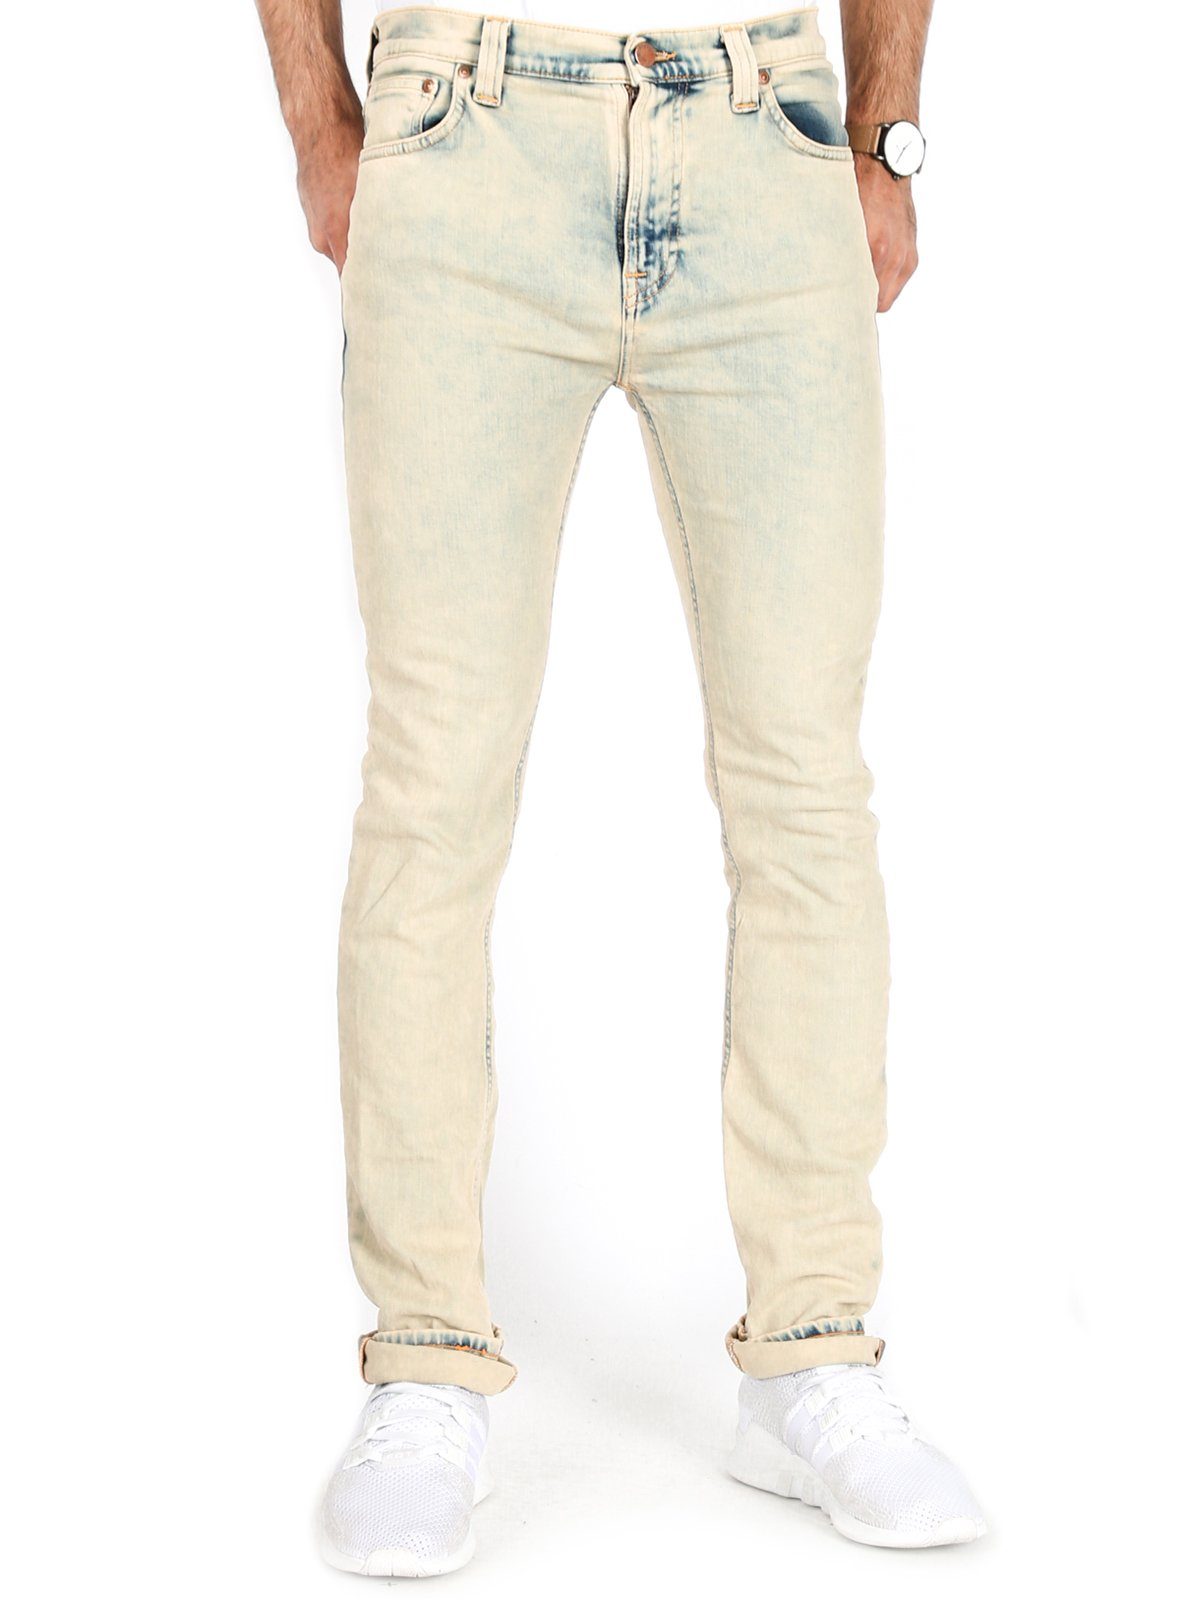 Nudie Jeans Skinny-fit-Jeans Unisex High Waist - High Kai Cobalt Envy  online kaufen | OTTO